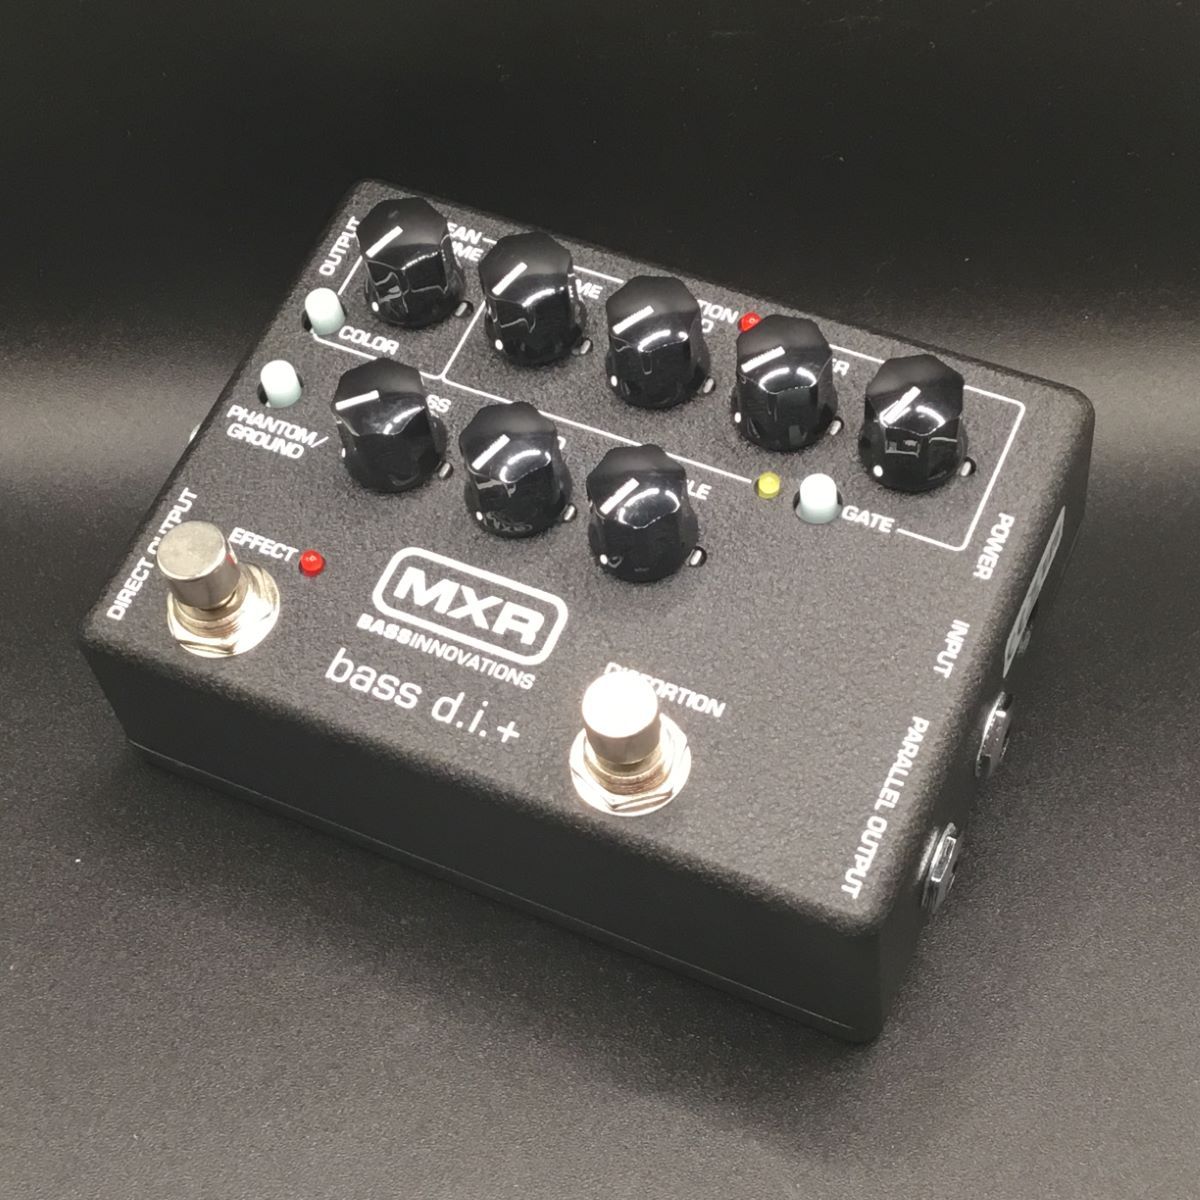 MXR M80 Bass D.I.+ ベースプリアンプ（新品/送料無料）【楽器検索 